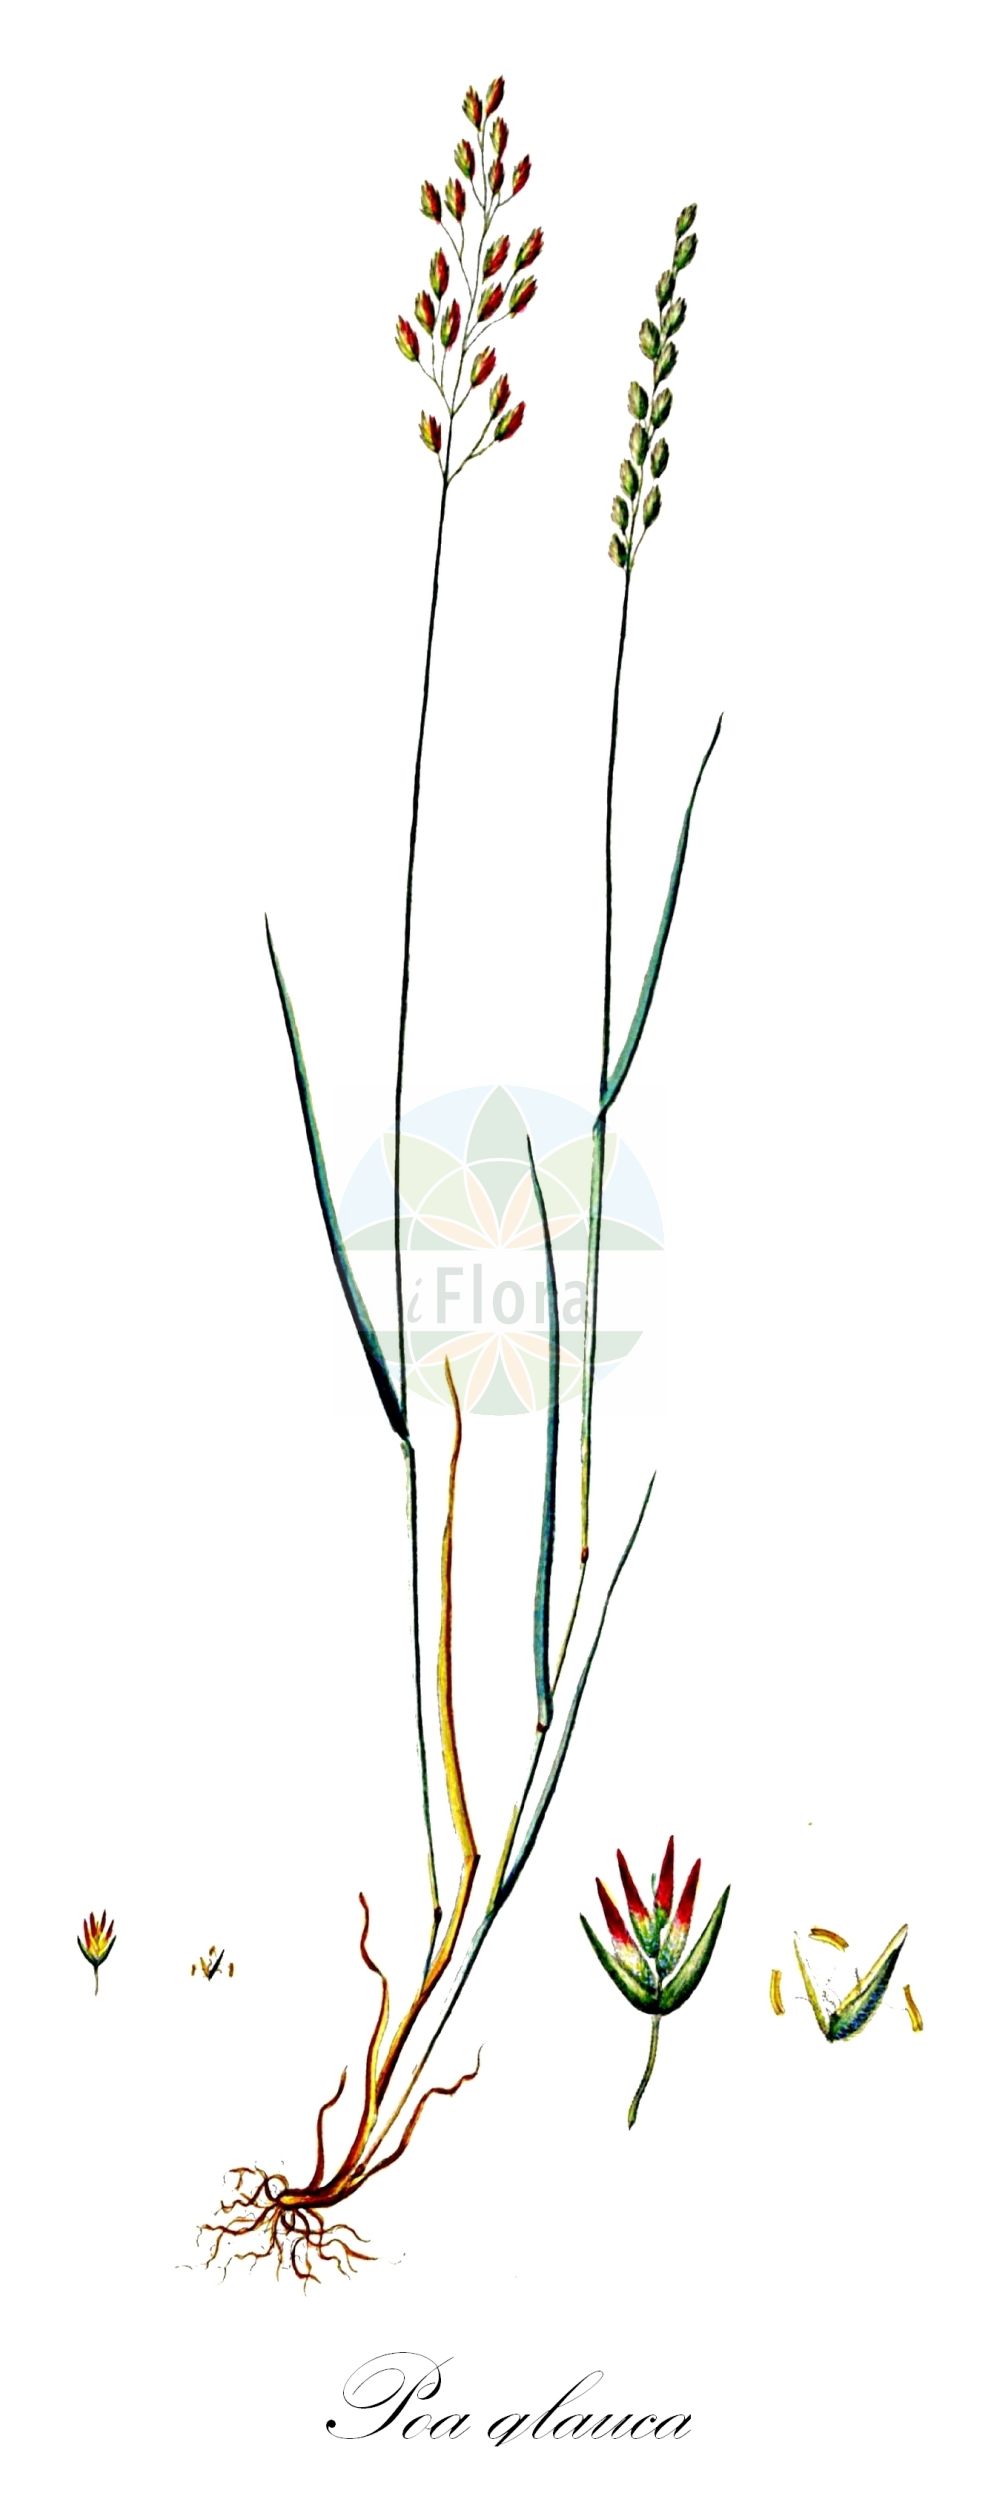 Historische Abbildung von Poa glauca (Blaues Rispengras - Glaucous Meadow-grass). Das Bild zeigt Blatt, Bluete, Frucht und Same. ---- Historical Drawing of Poa glauca (Blaues Rispengras - Glaucous Meadow-grass). The image is showing leaf, flower, fruit and seed.(Poa glauca,Blaues Rispengras,Glaucous Meadow-grass,Poa balfourii,Poa bryophila,Poa caesia,Poa ganeschinii,Poa glauca,Poa glaucantha,Poa jurassica,Poa riphaea,Blaues Rispengras,Blaugruenes Rispengras,Glaucous Meadow-grass,Glaucous Bluegrass,Poa,Rispengras,Bluegrass,Poaceae,Süßgräser,Grass family,Blatt,Bluete,Frucht,Same,leaf,flower,fruit,seed,Oeder (1761-1883))